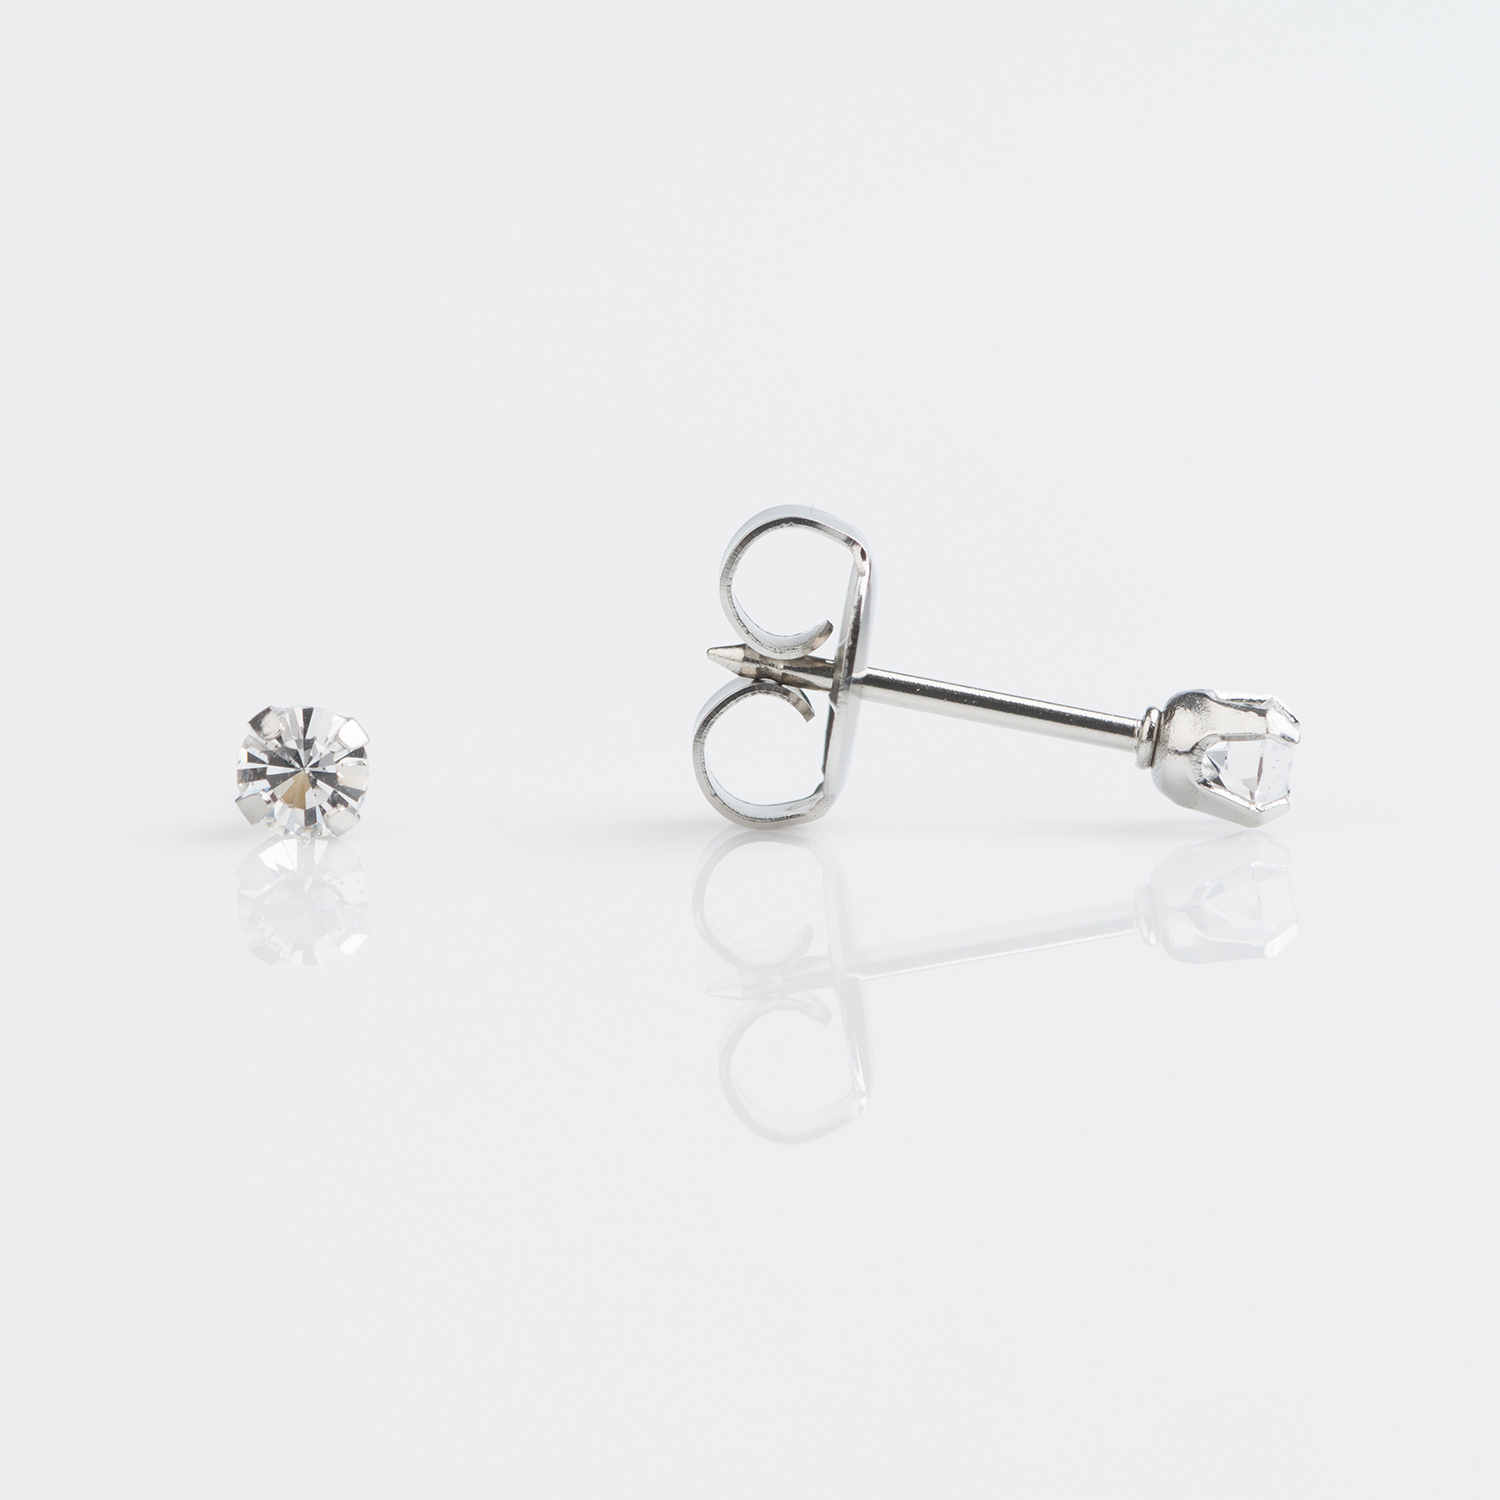 7512-0104 – Studex Stainless TIFF. 3mm April Crystal Piercing Earrings